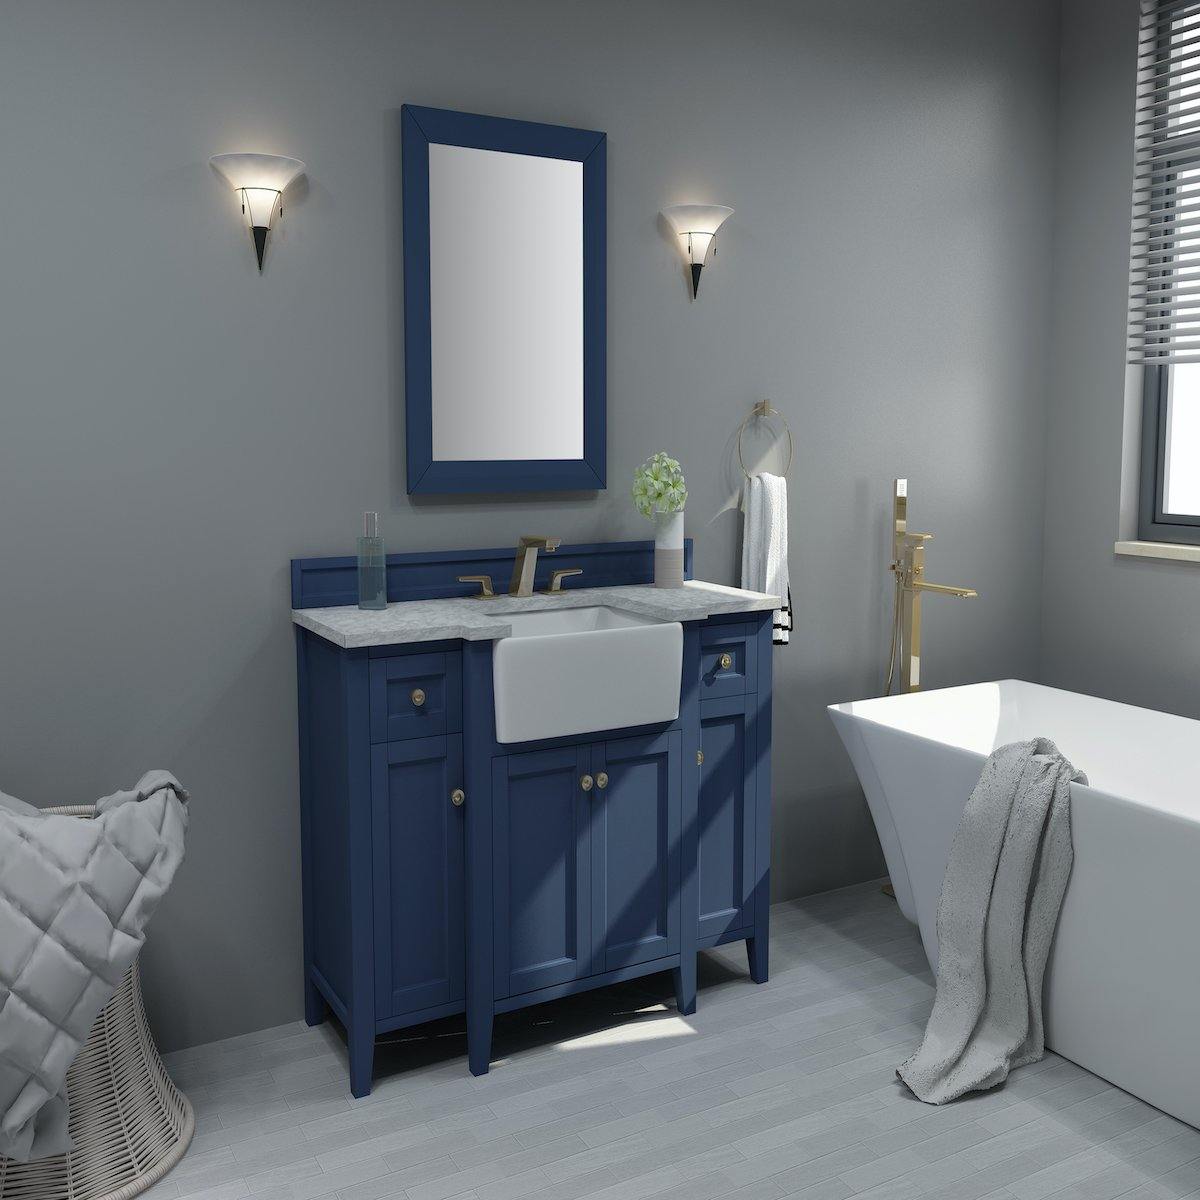 Ancerre Designs Adeline 48 Inch Heritage Blue Single Vanity in Bathroom